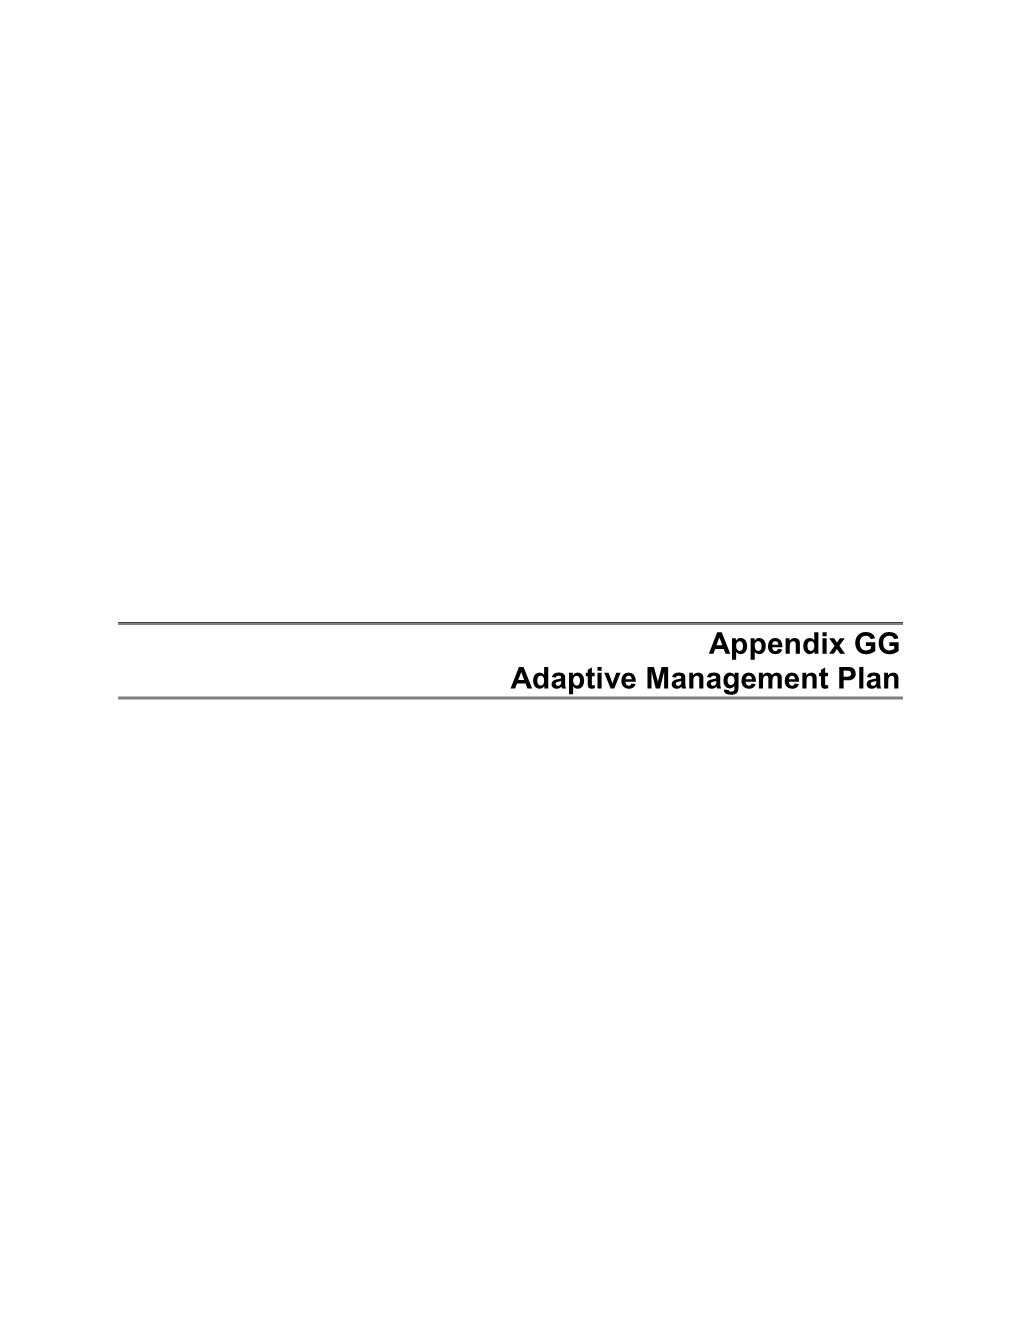 Adaptive Management Plan